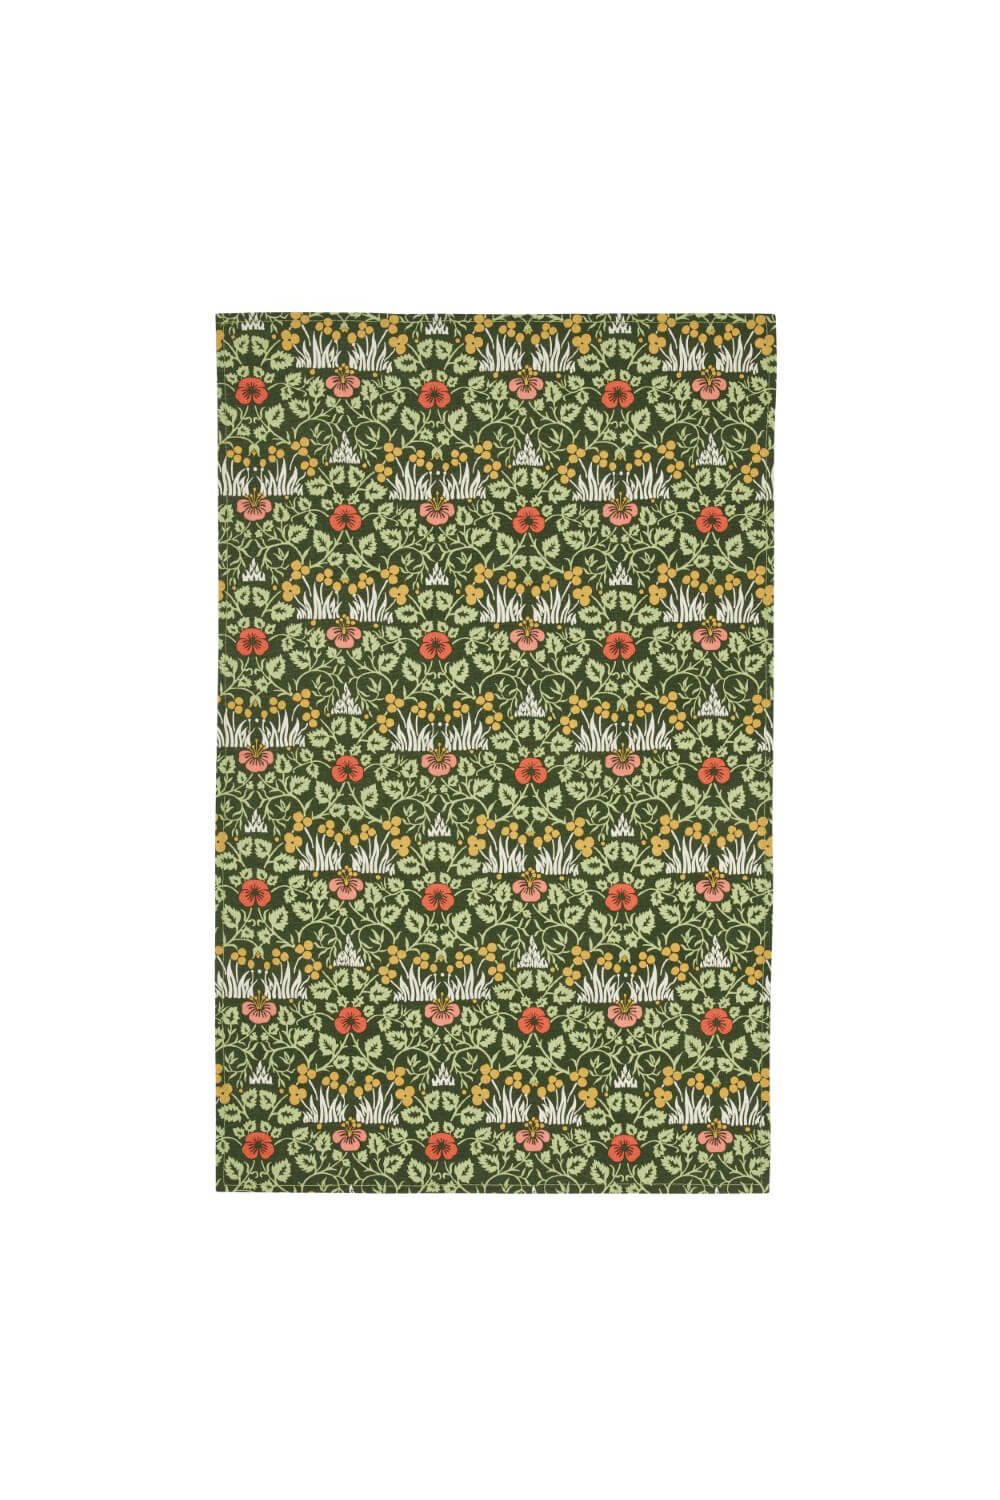 Heathcote & Ivory - Set of 2 Tea Towels in Green - Roman Originals UK